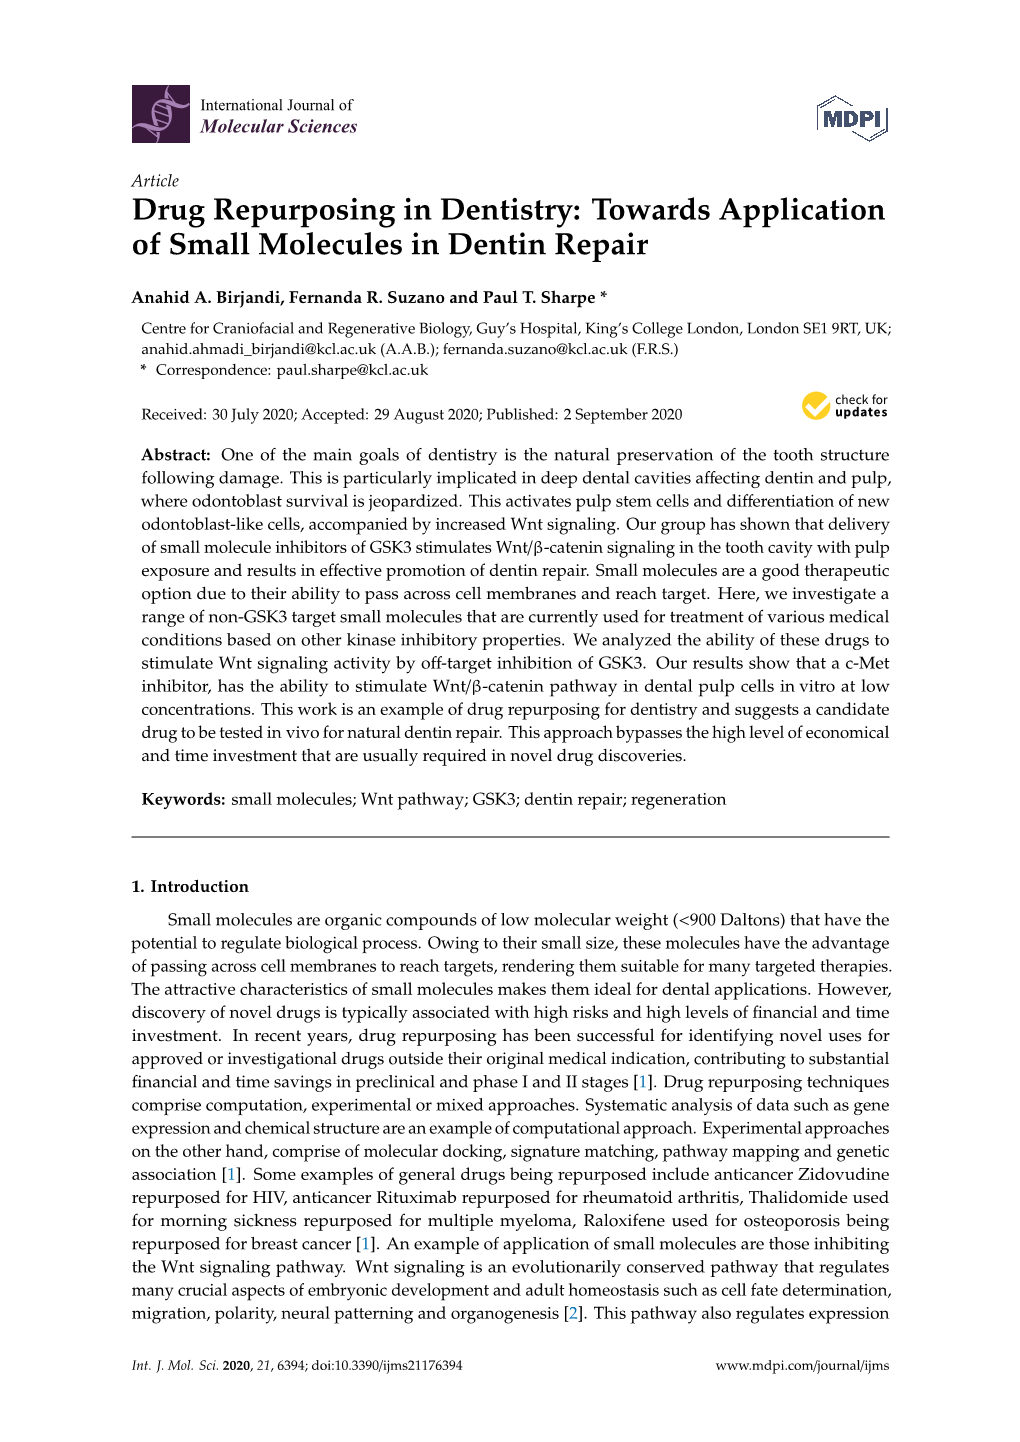 Towards Application of Small Molecules in Dentin Repair